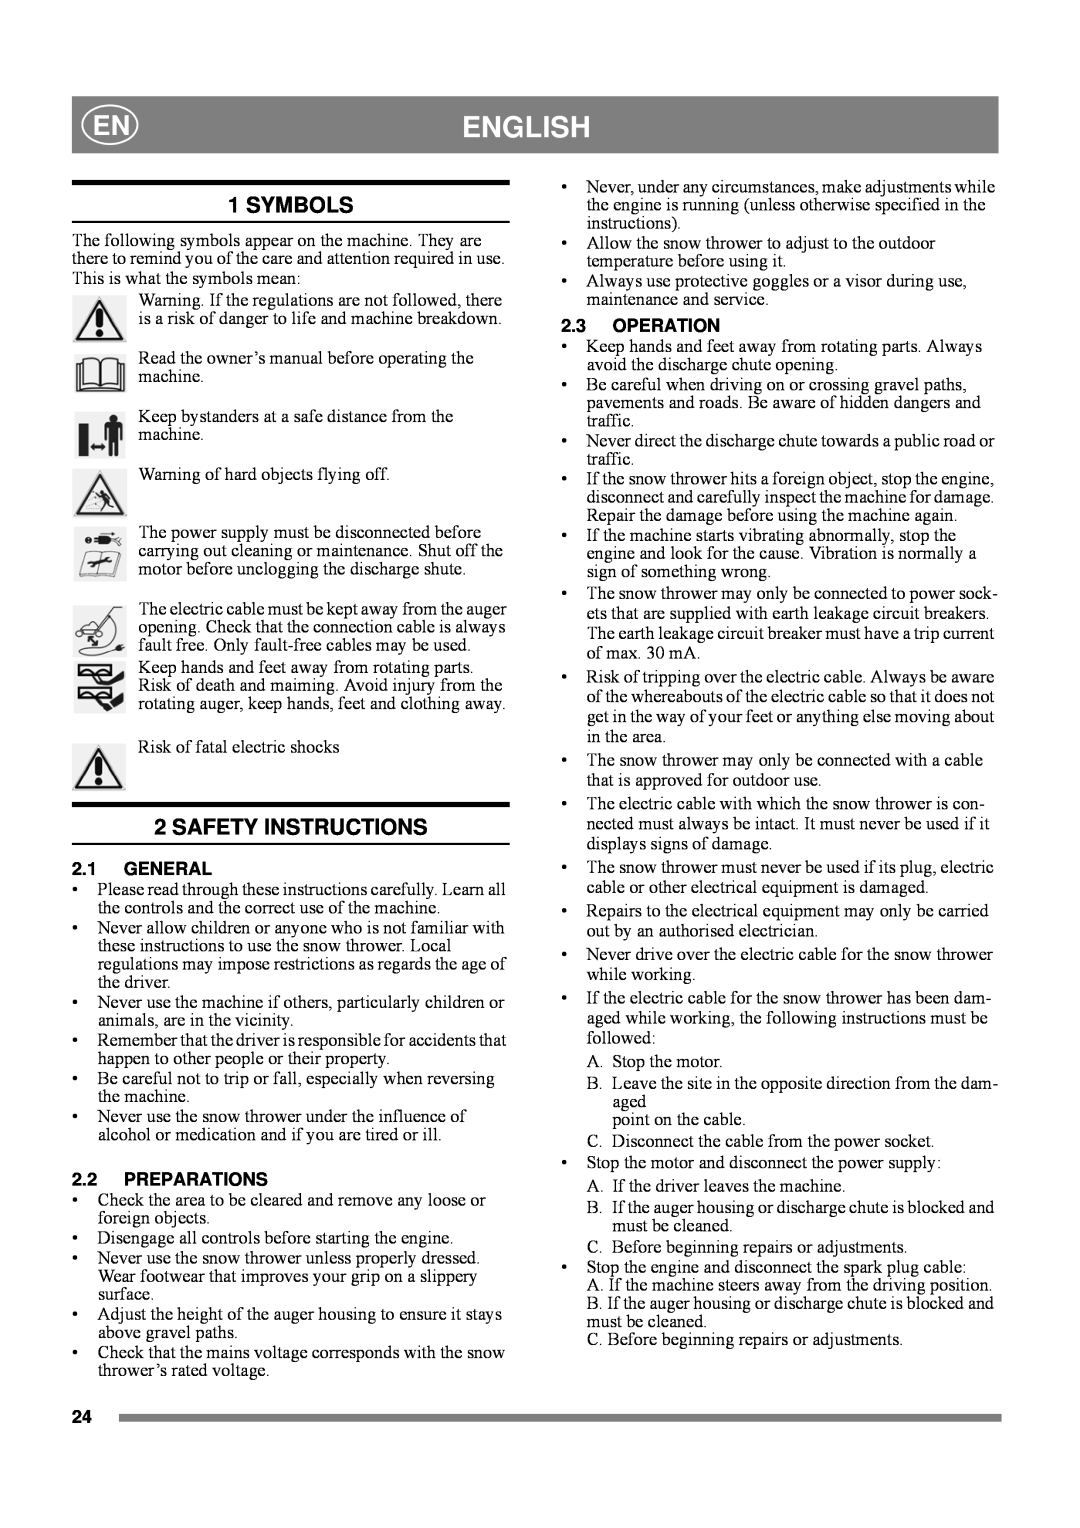 Stiga 8218-2218-71 manual English, Symbols, Safety Instructions, 2.1GENERAL, 2.2PREPARATIONS, 2.3OPERATION 